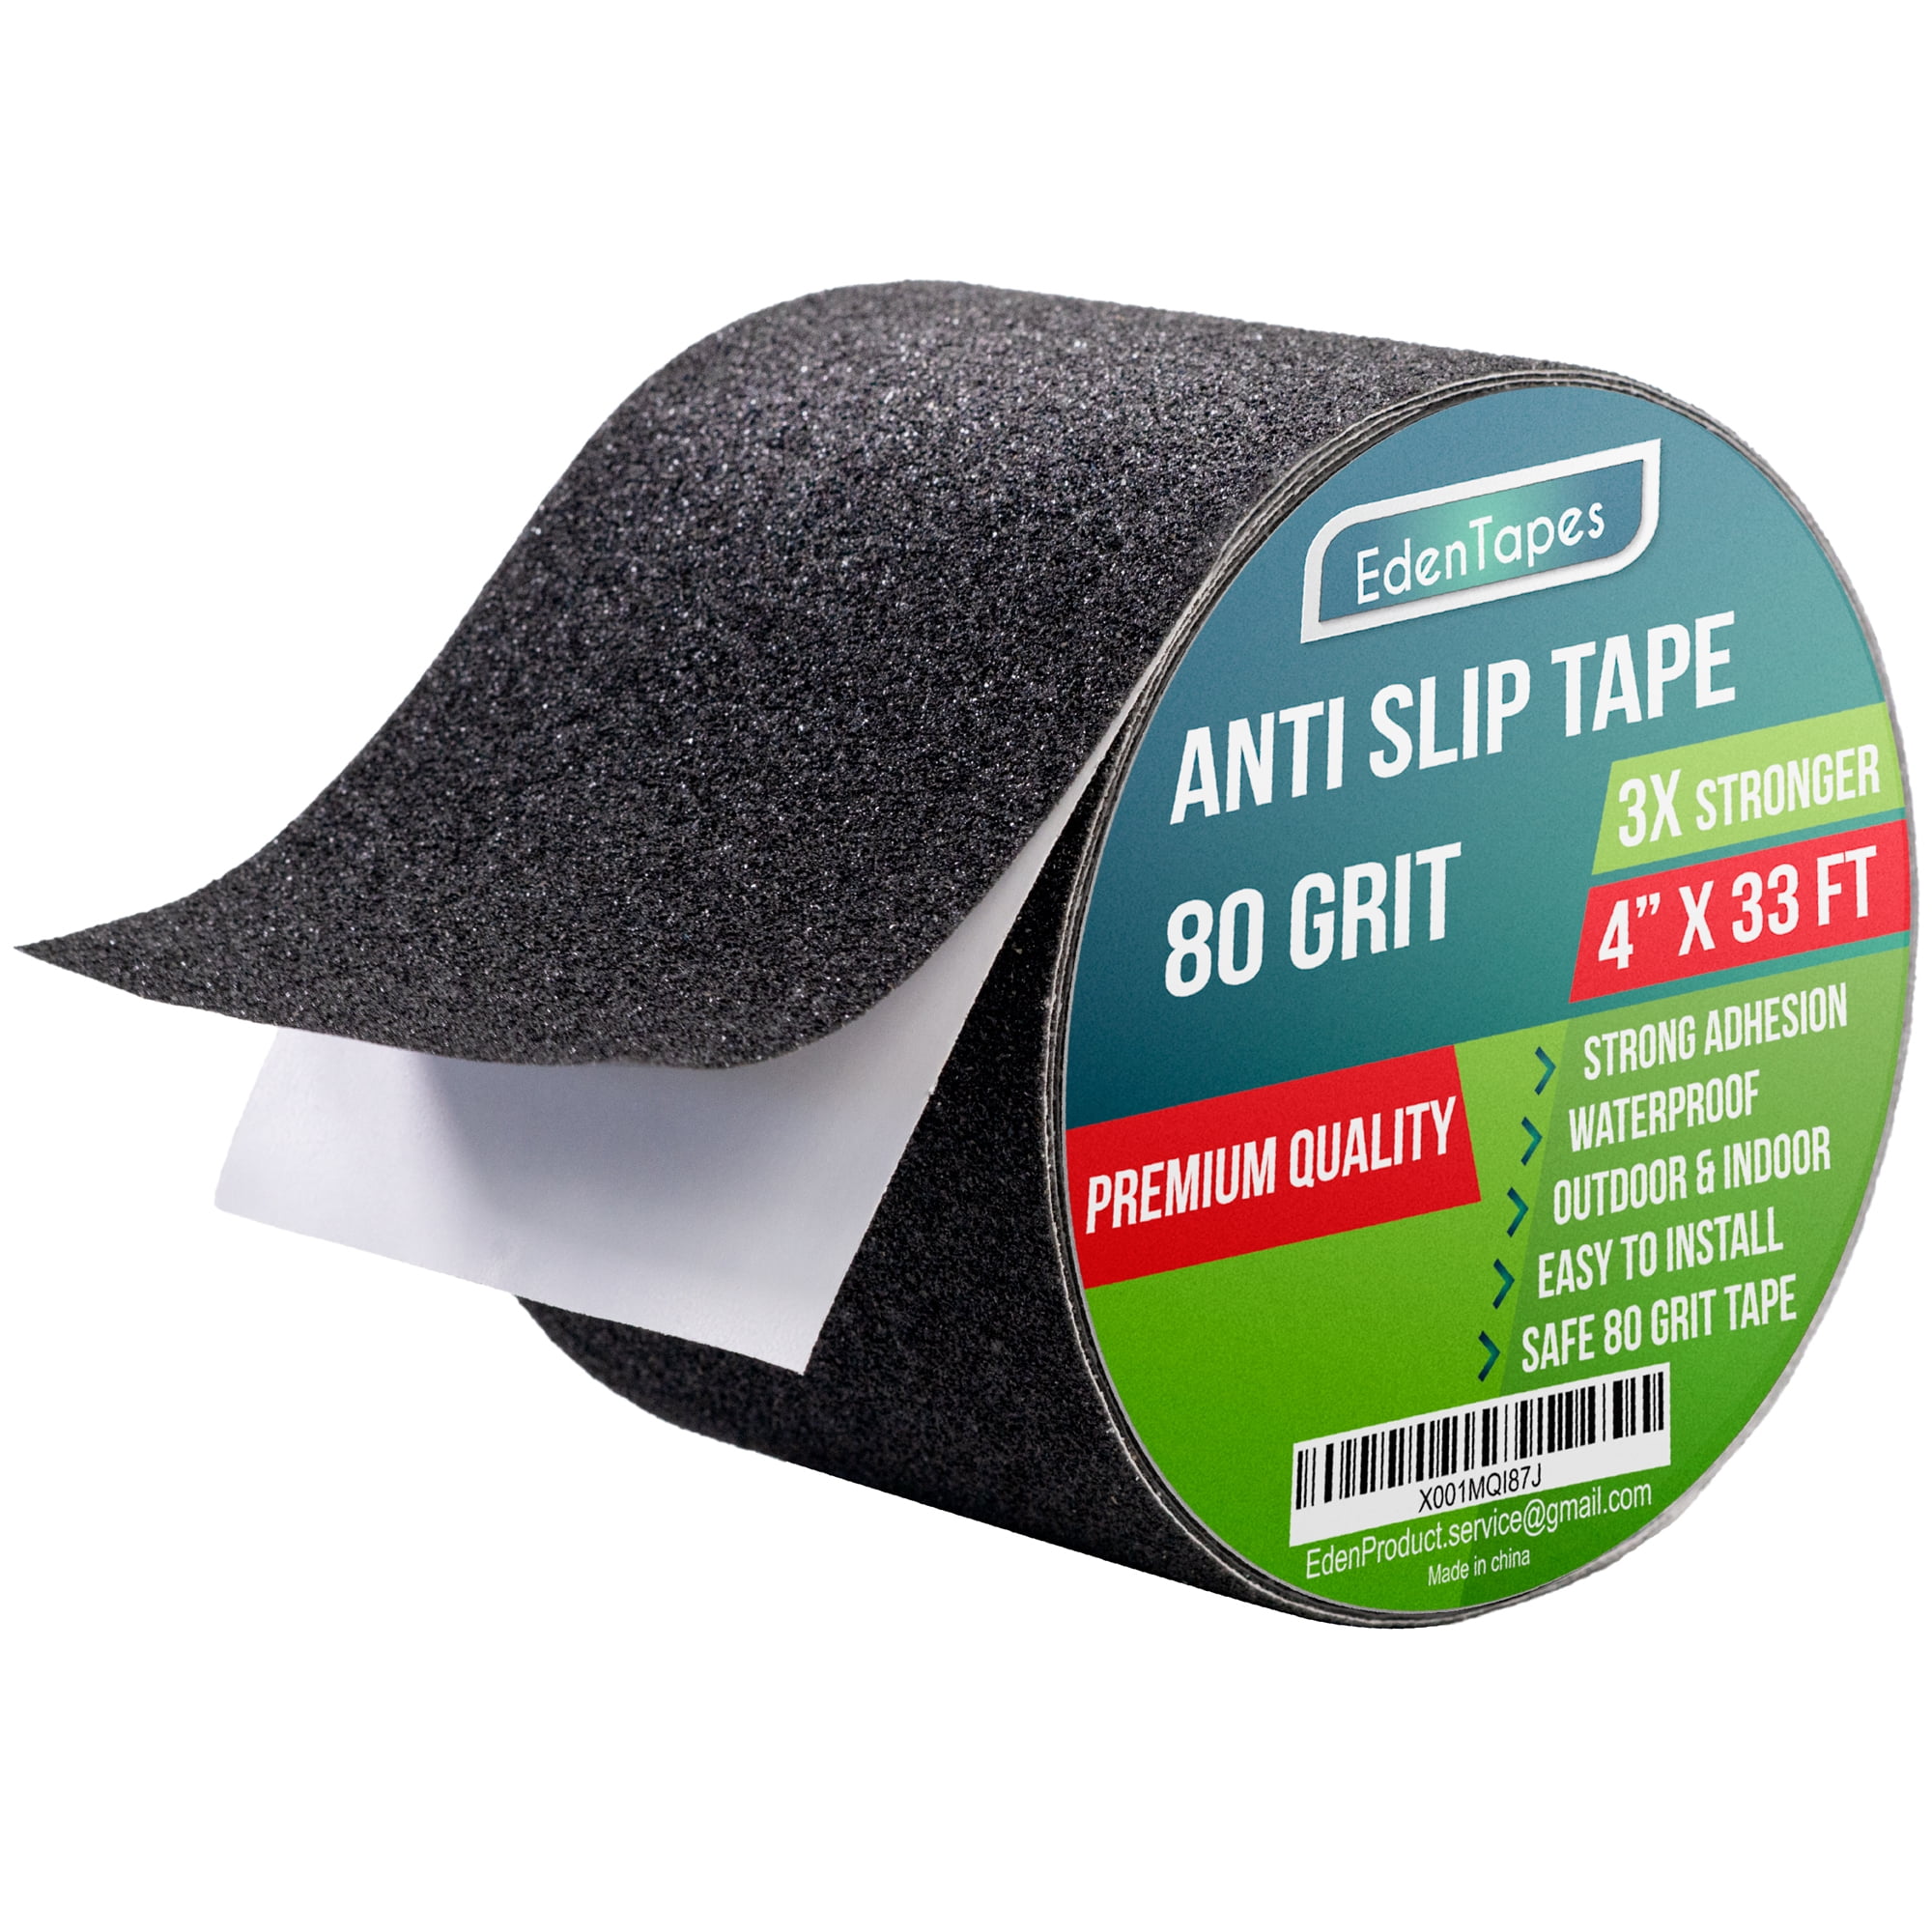 Foot Friendly Anti Slip Tape High Grip Wet Room Bath Shower Food Safety DIY Skin 